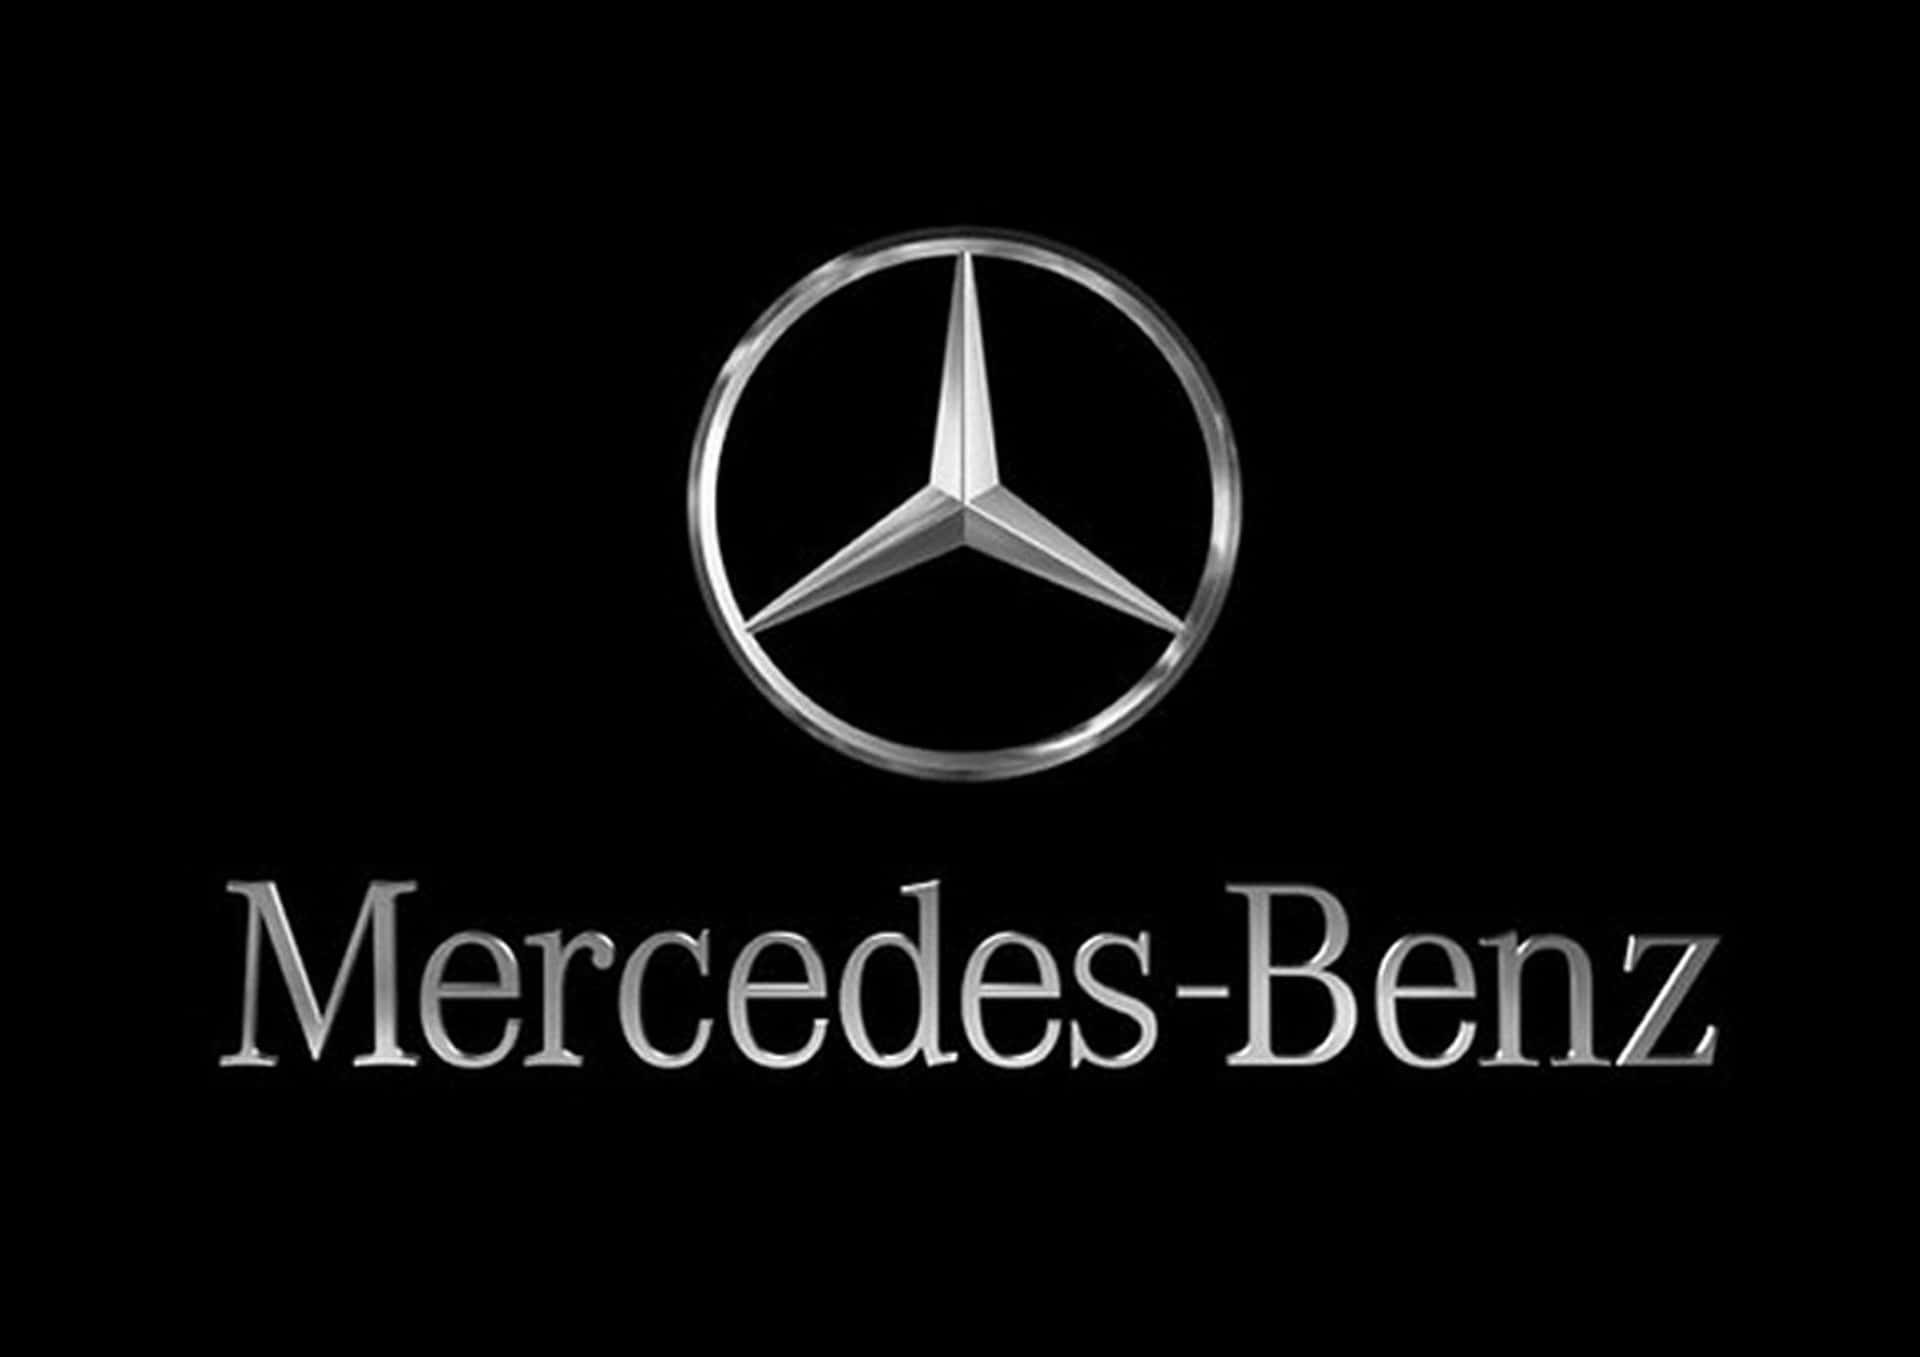 Logode Mercedes Benz Sobre Un Fondo Negro